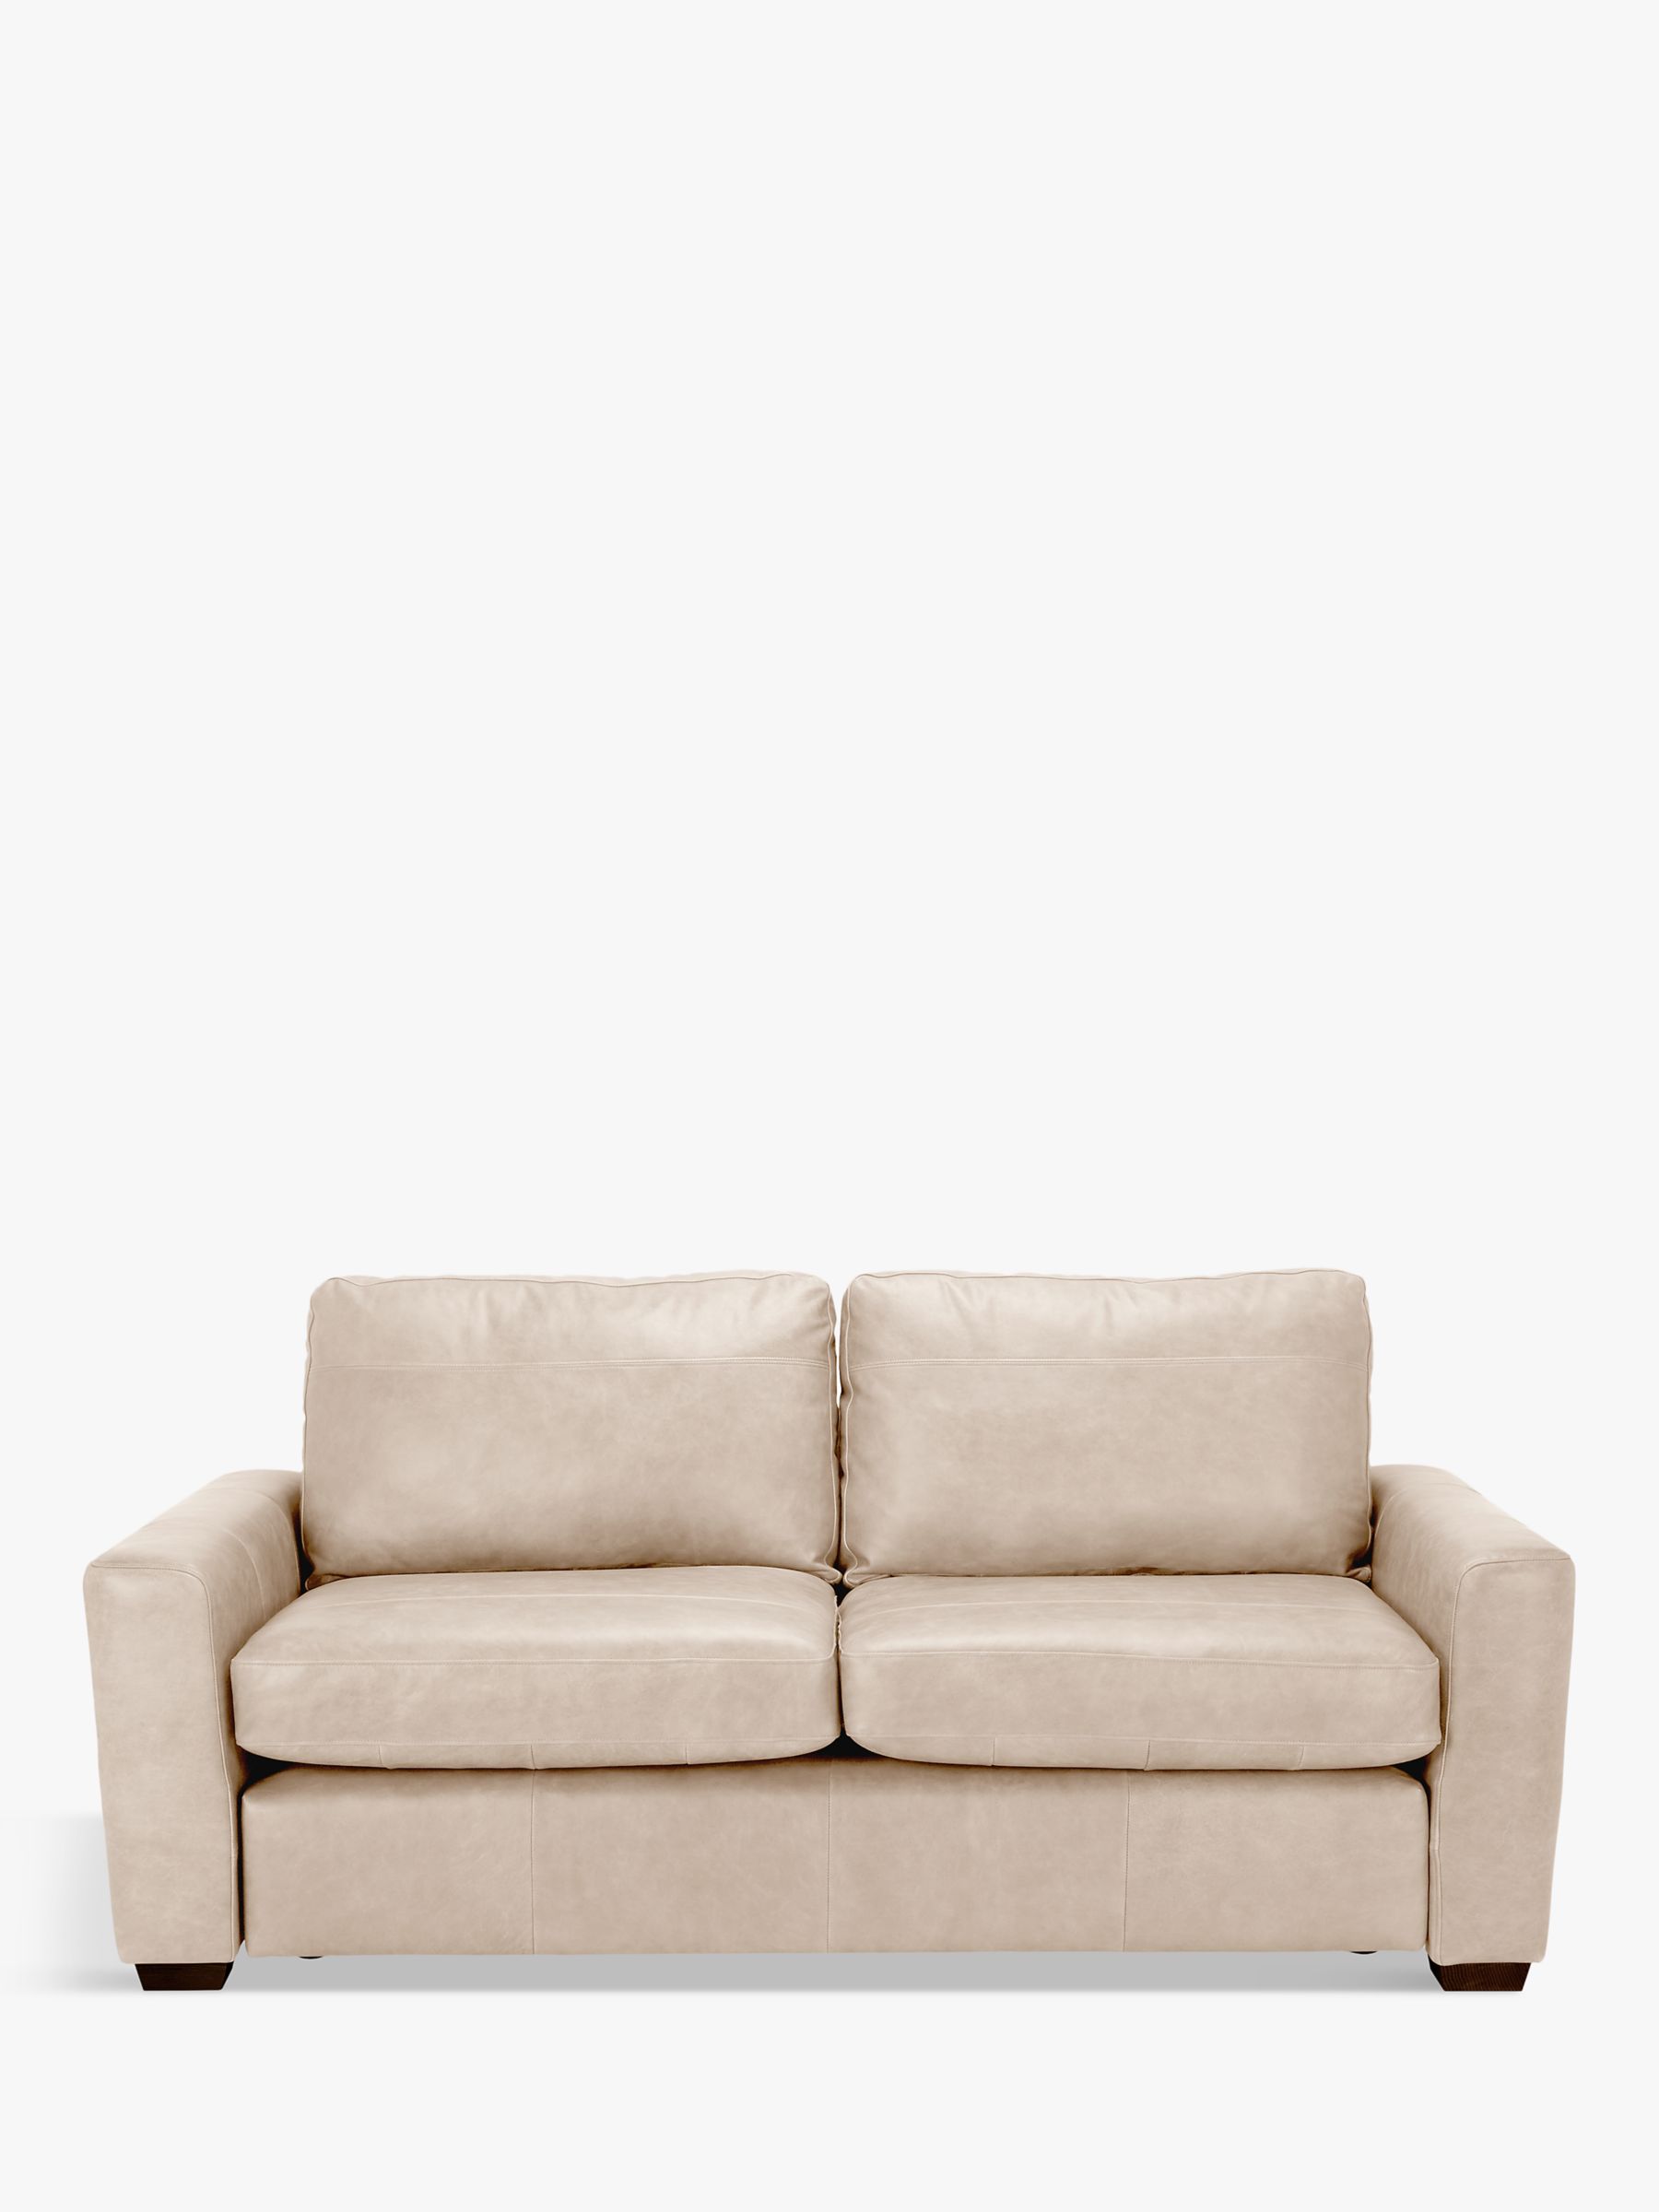 Oliver Range, John Lewis Oliver Large 3 Seater Leather Sofa, Dark Leg, Nature Putty